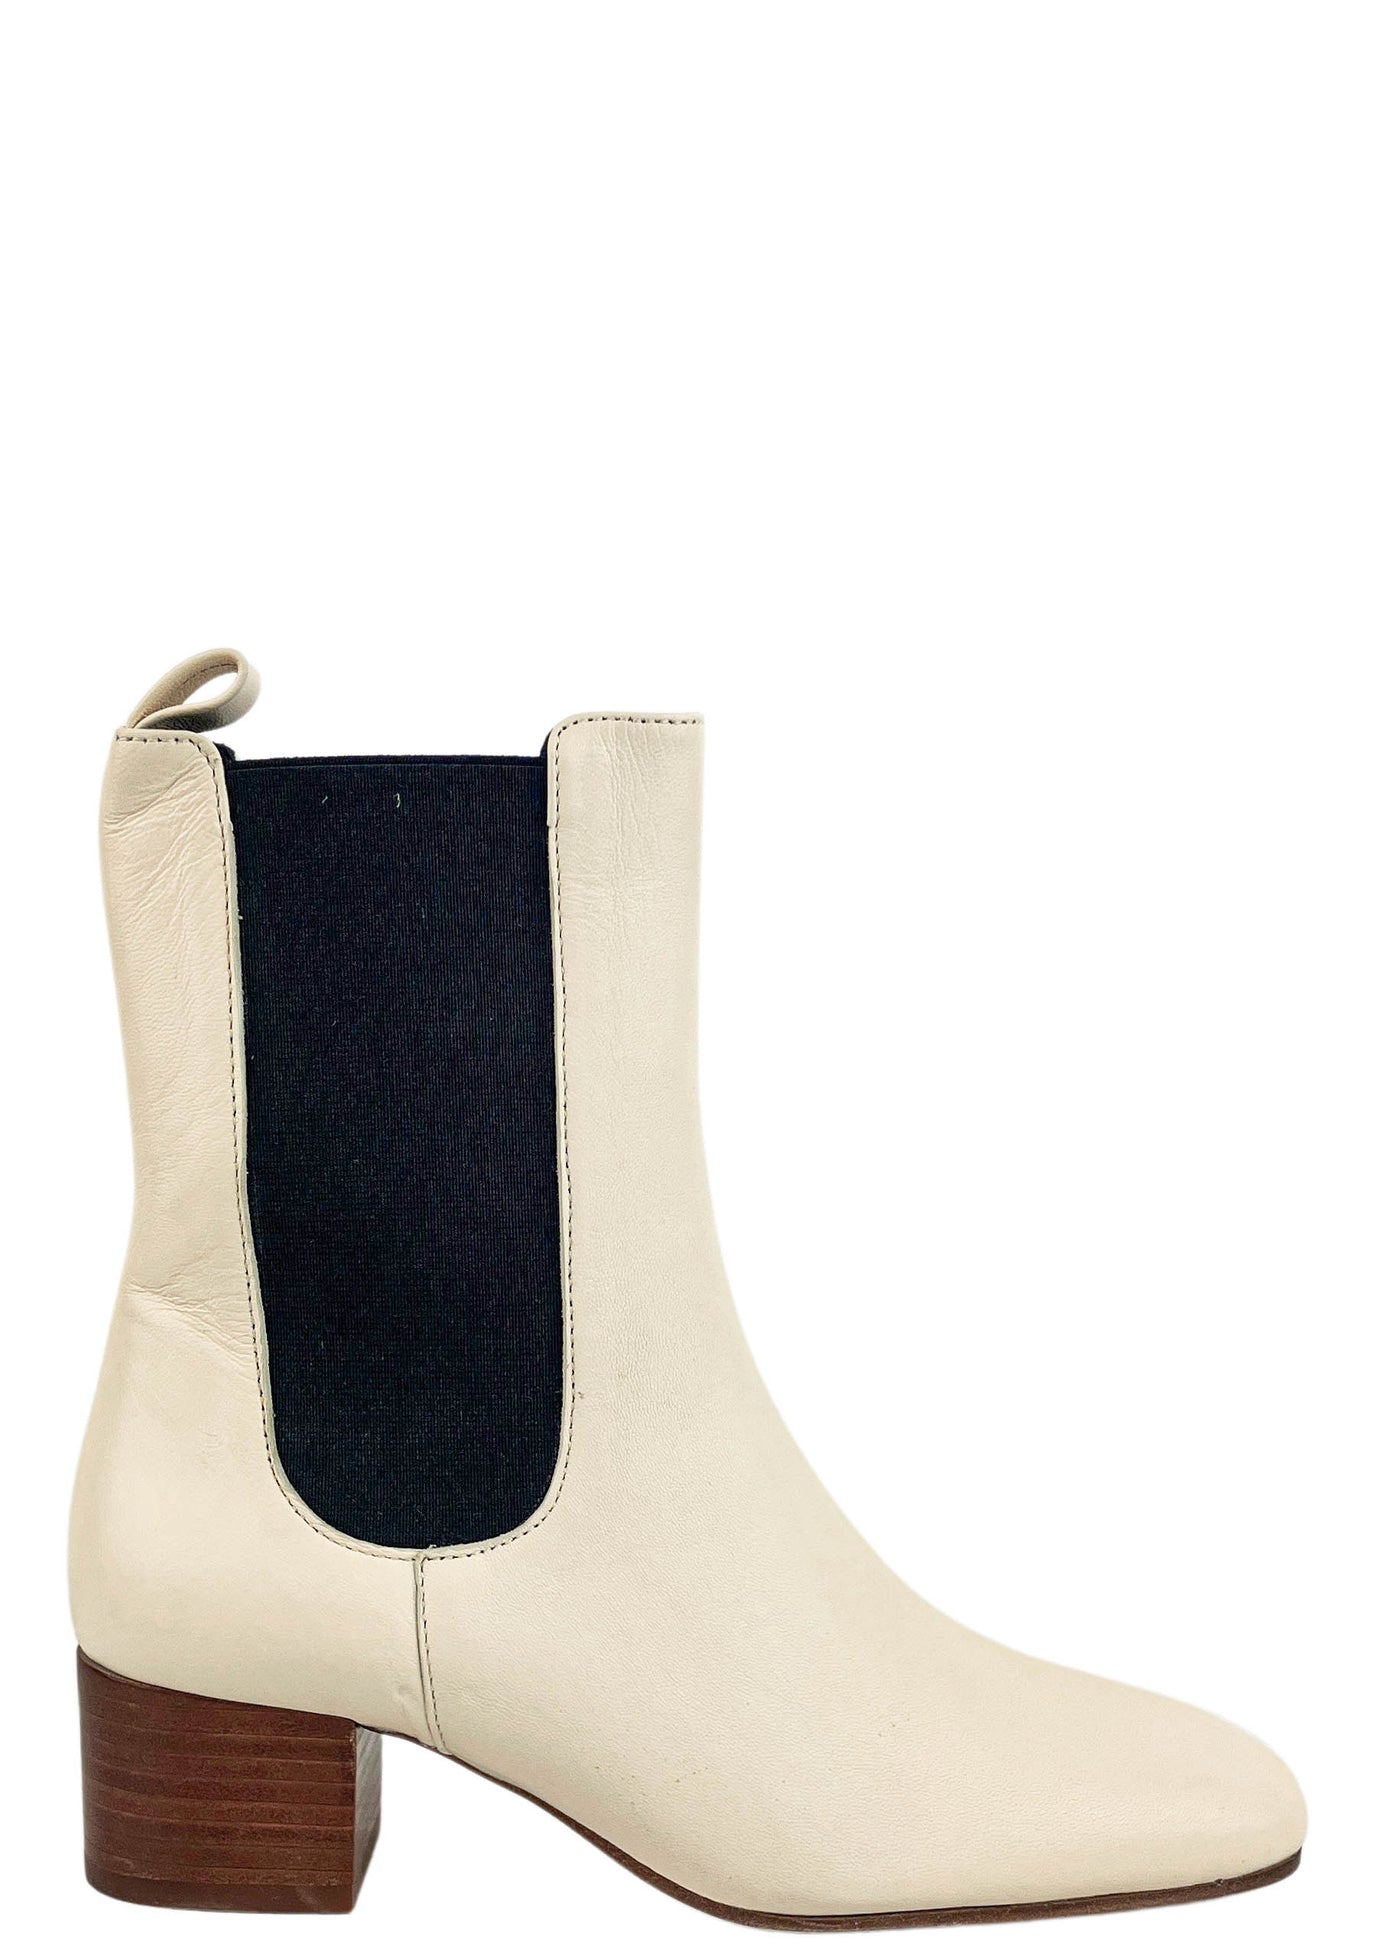 Staud Daphne Boots in Cream/Black - Discounts on Staud at UAL